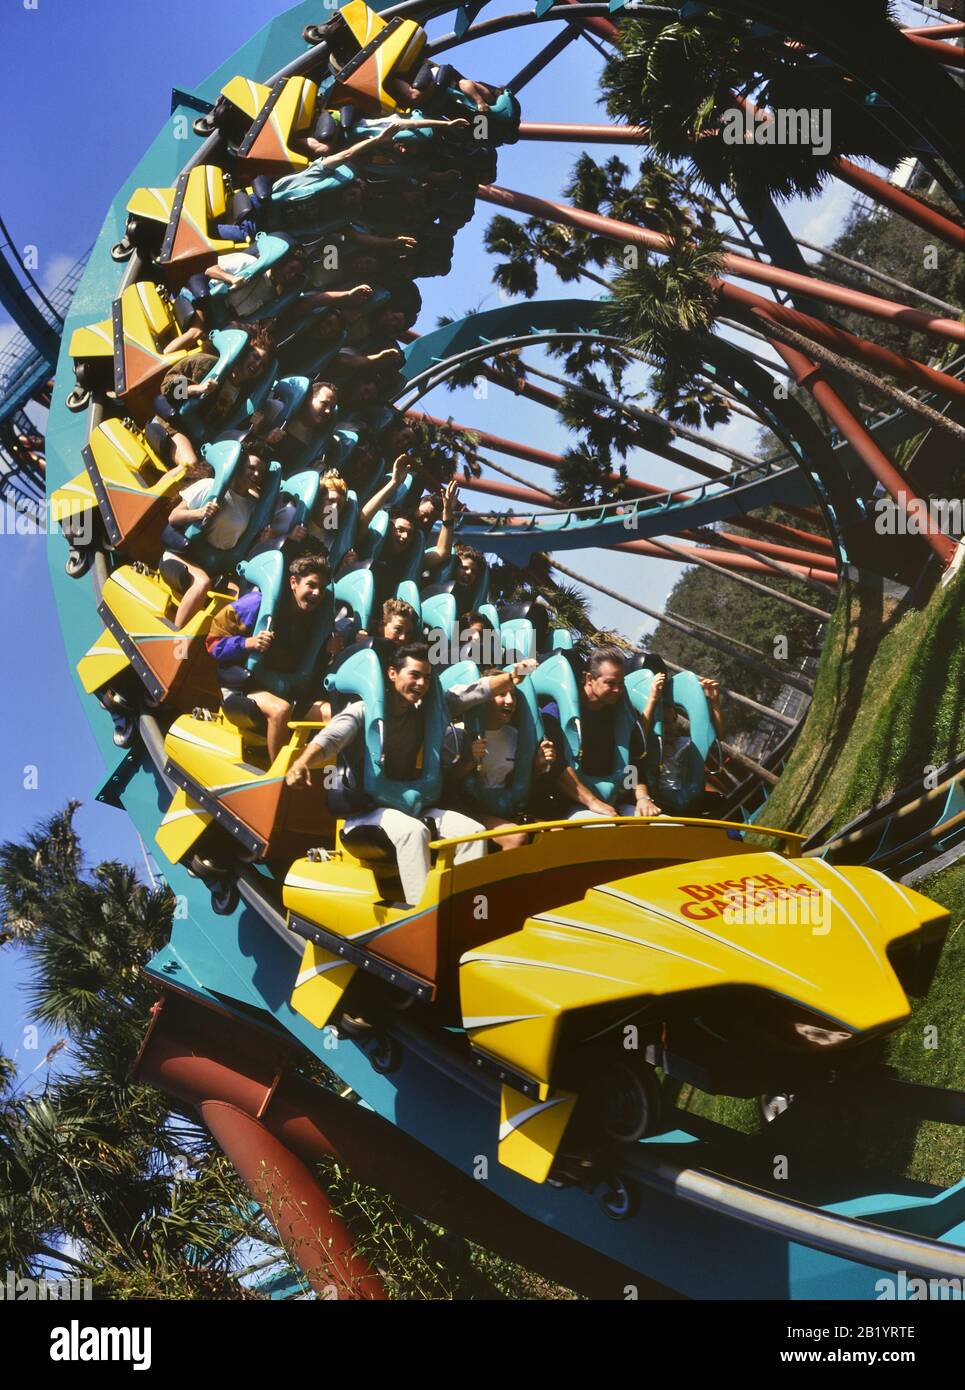 Kumba Roller Coaster Corkscrew Busch Gardens In Tampa Florida